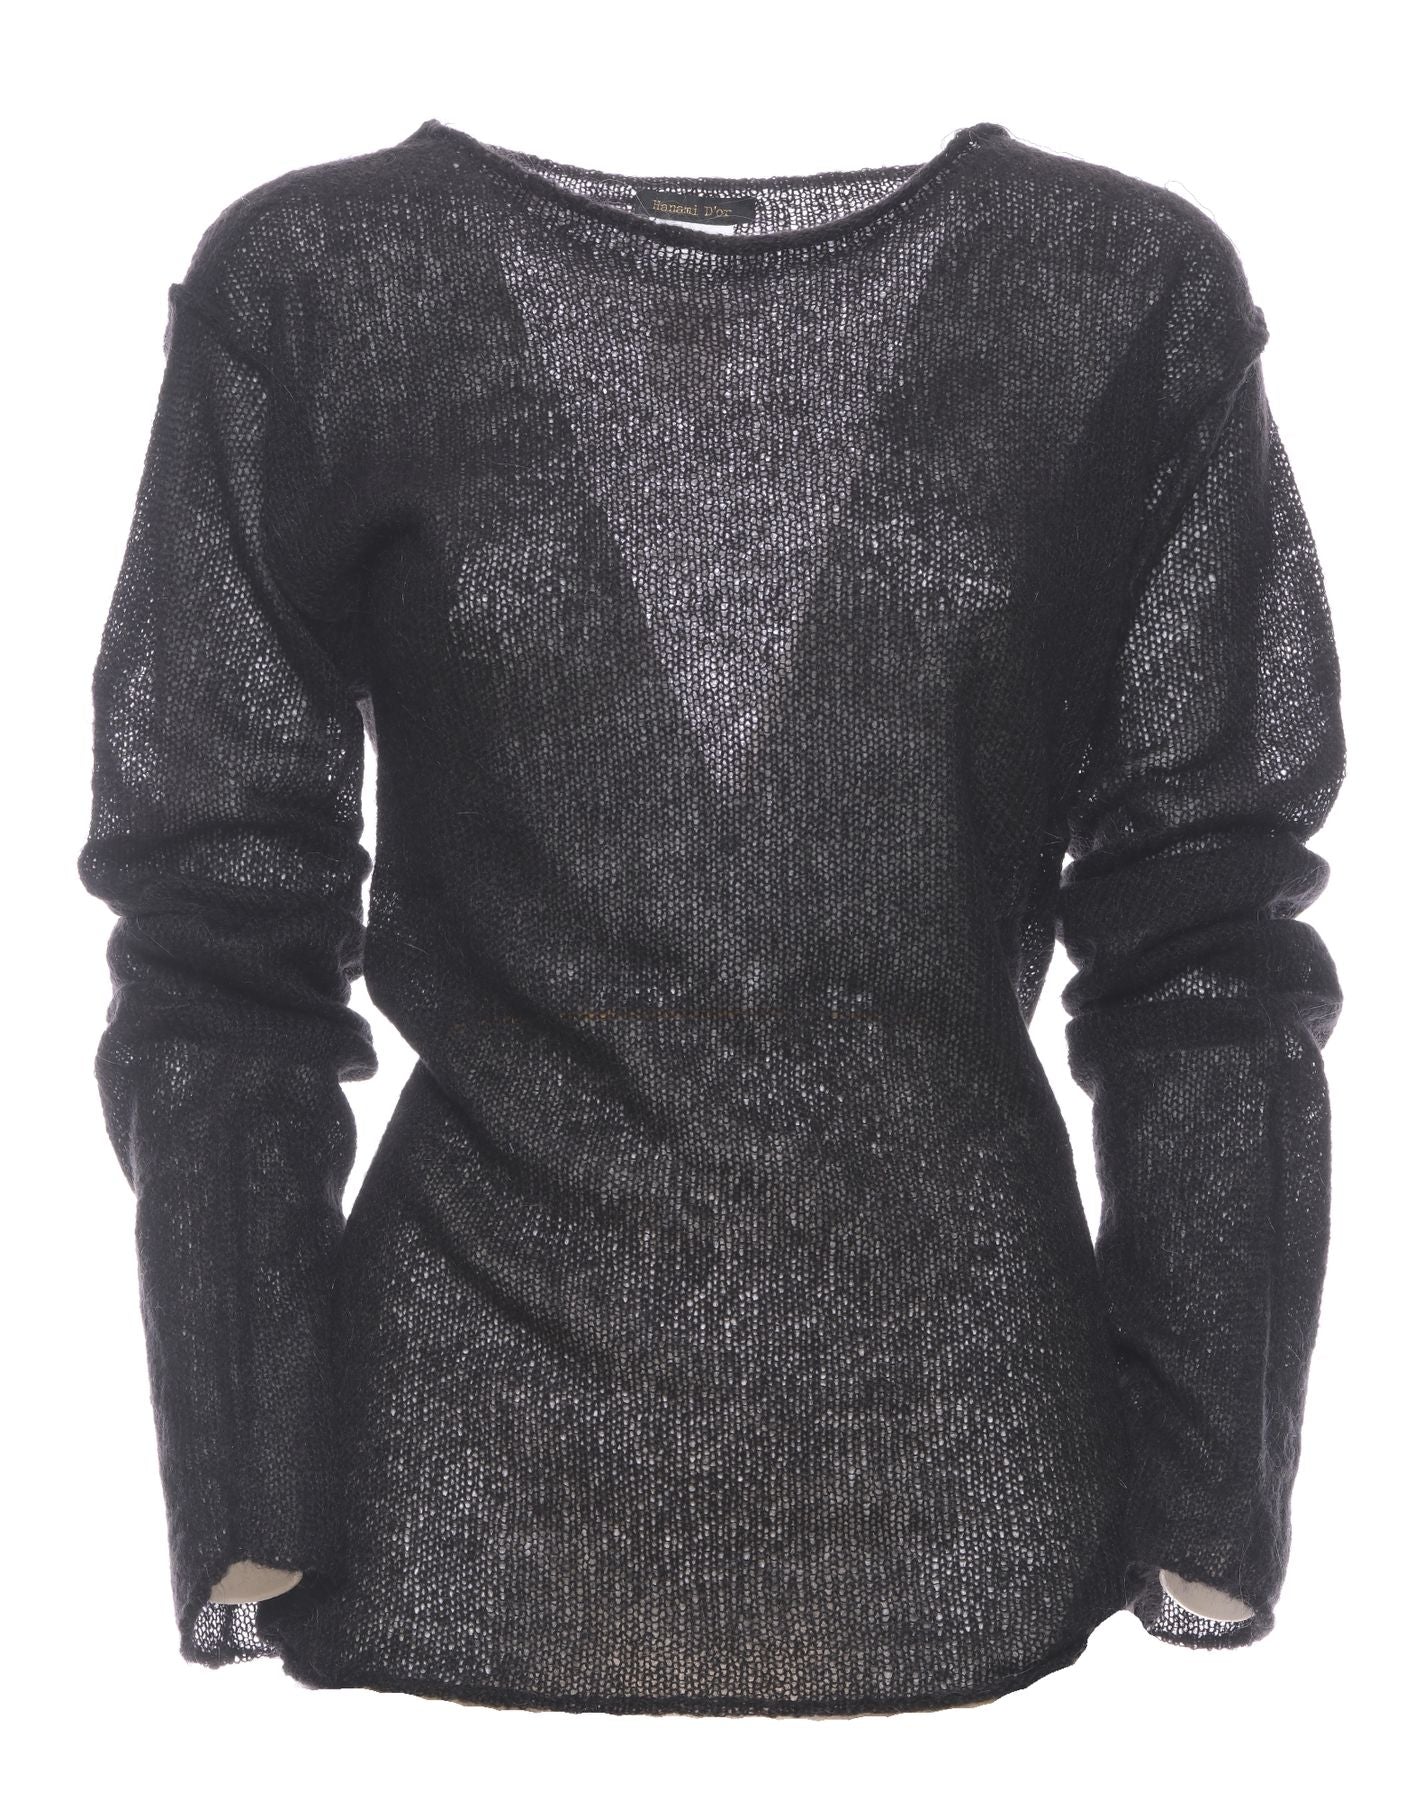 Sweatshirt for woman OASI 288 22 BLACK Hanami D'or